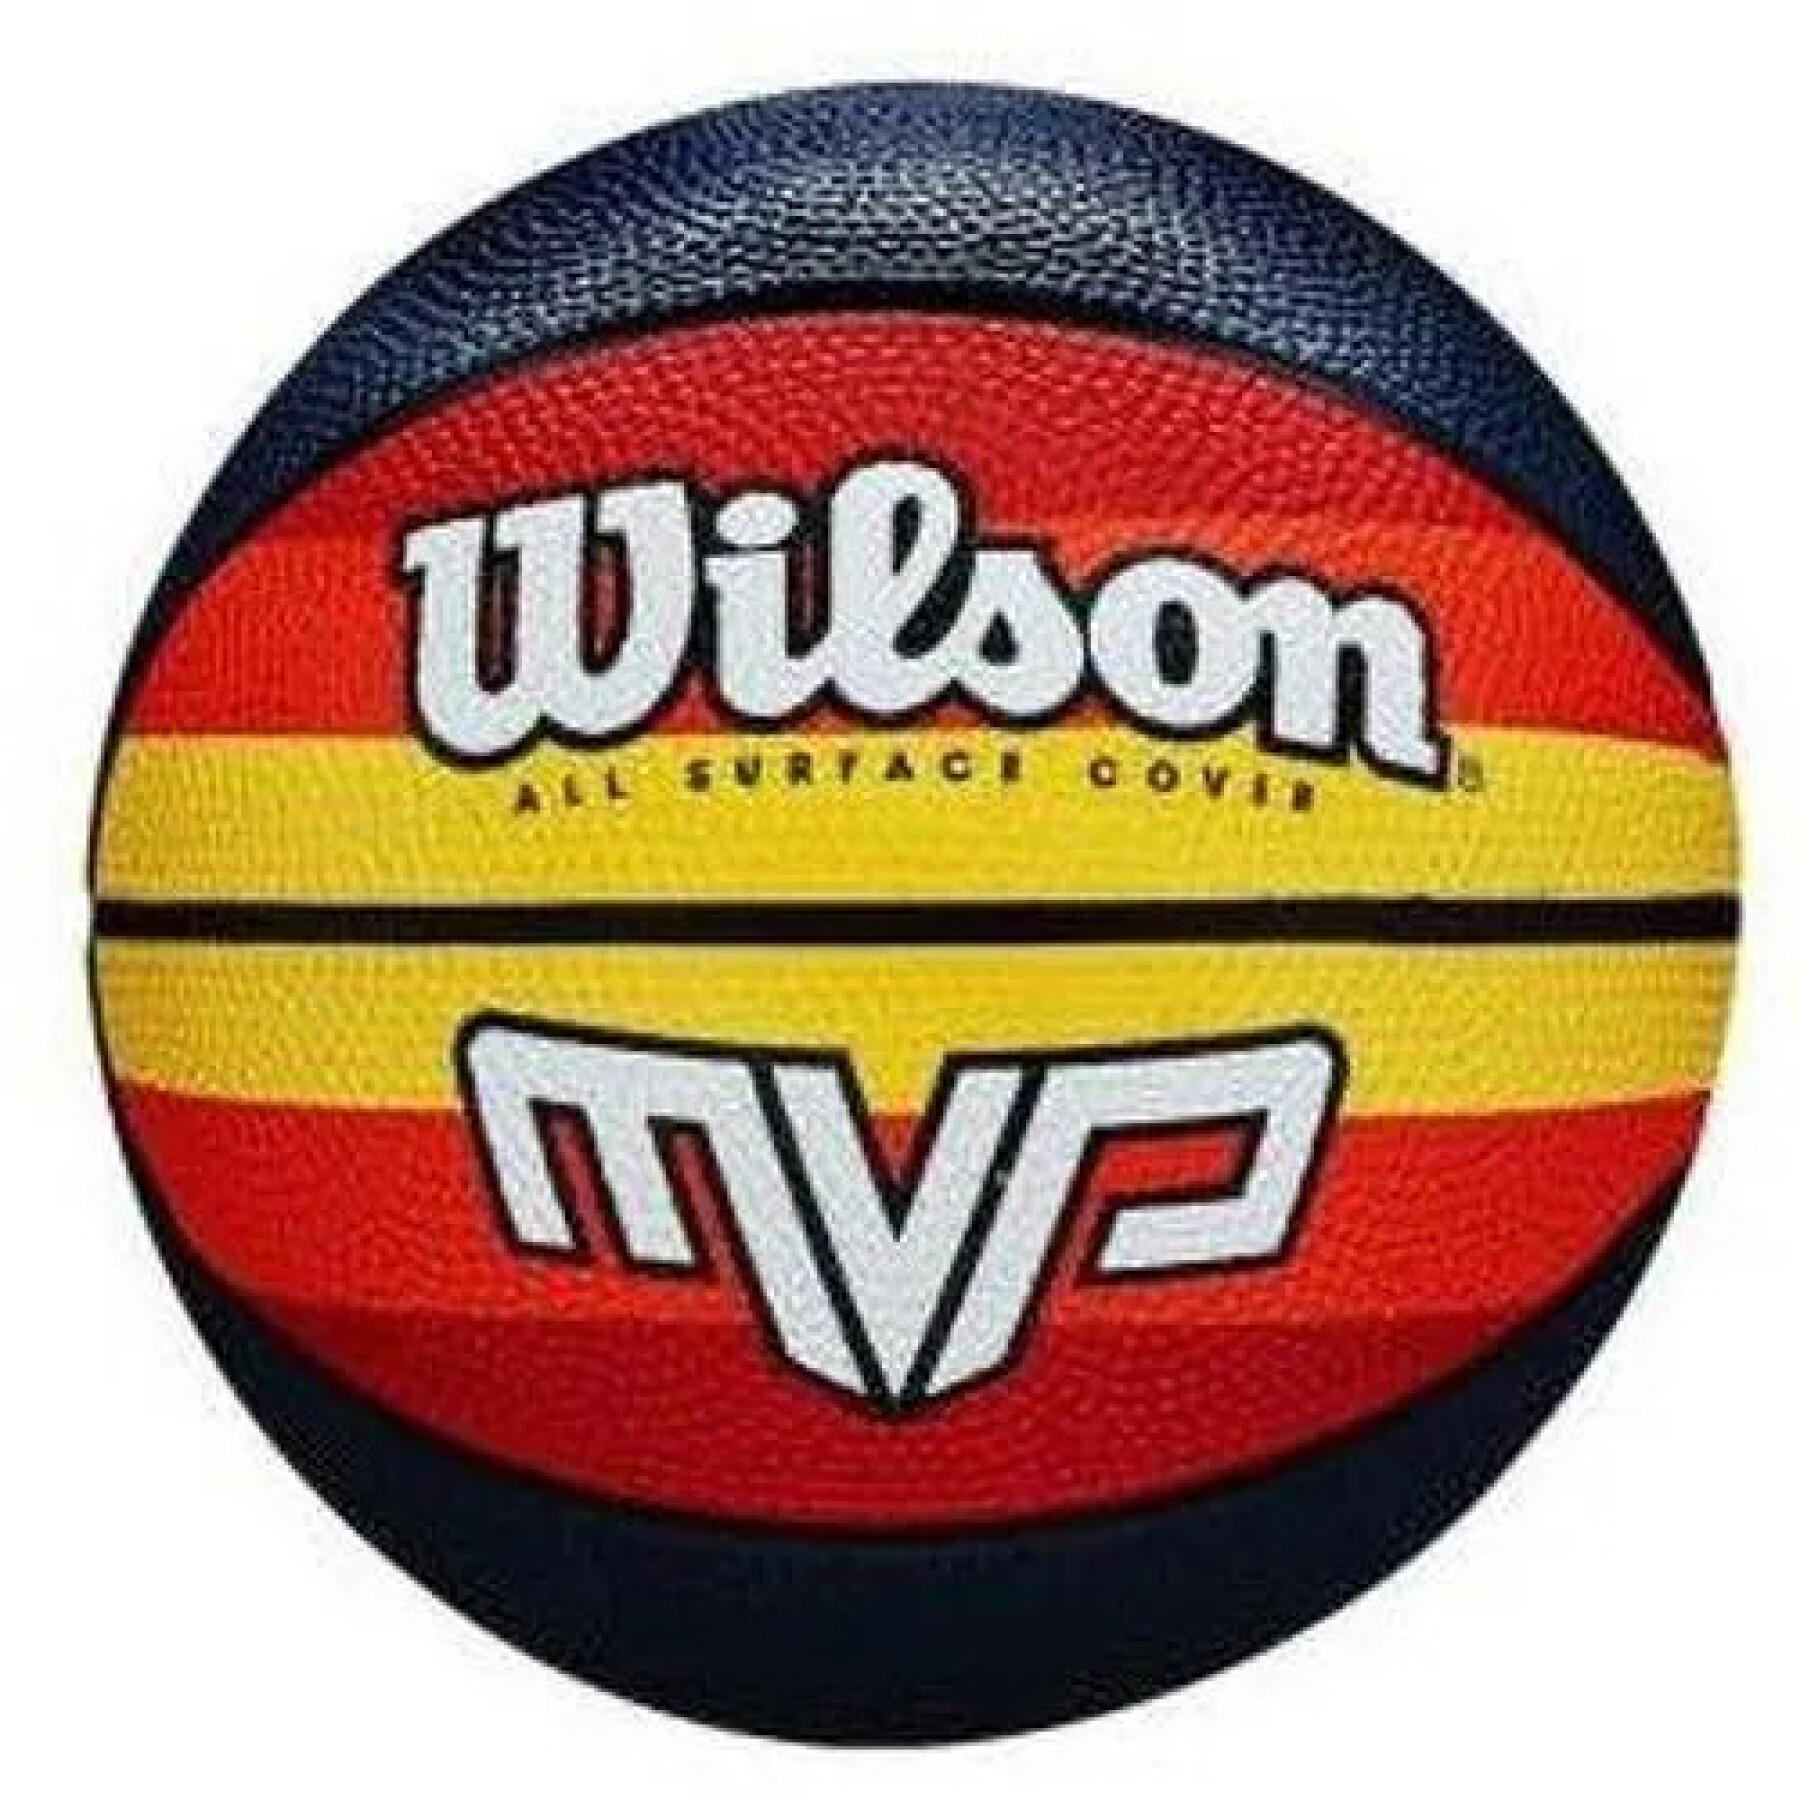 Ballon Wilson MVP Retro Orye